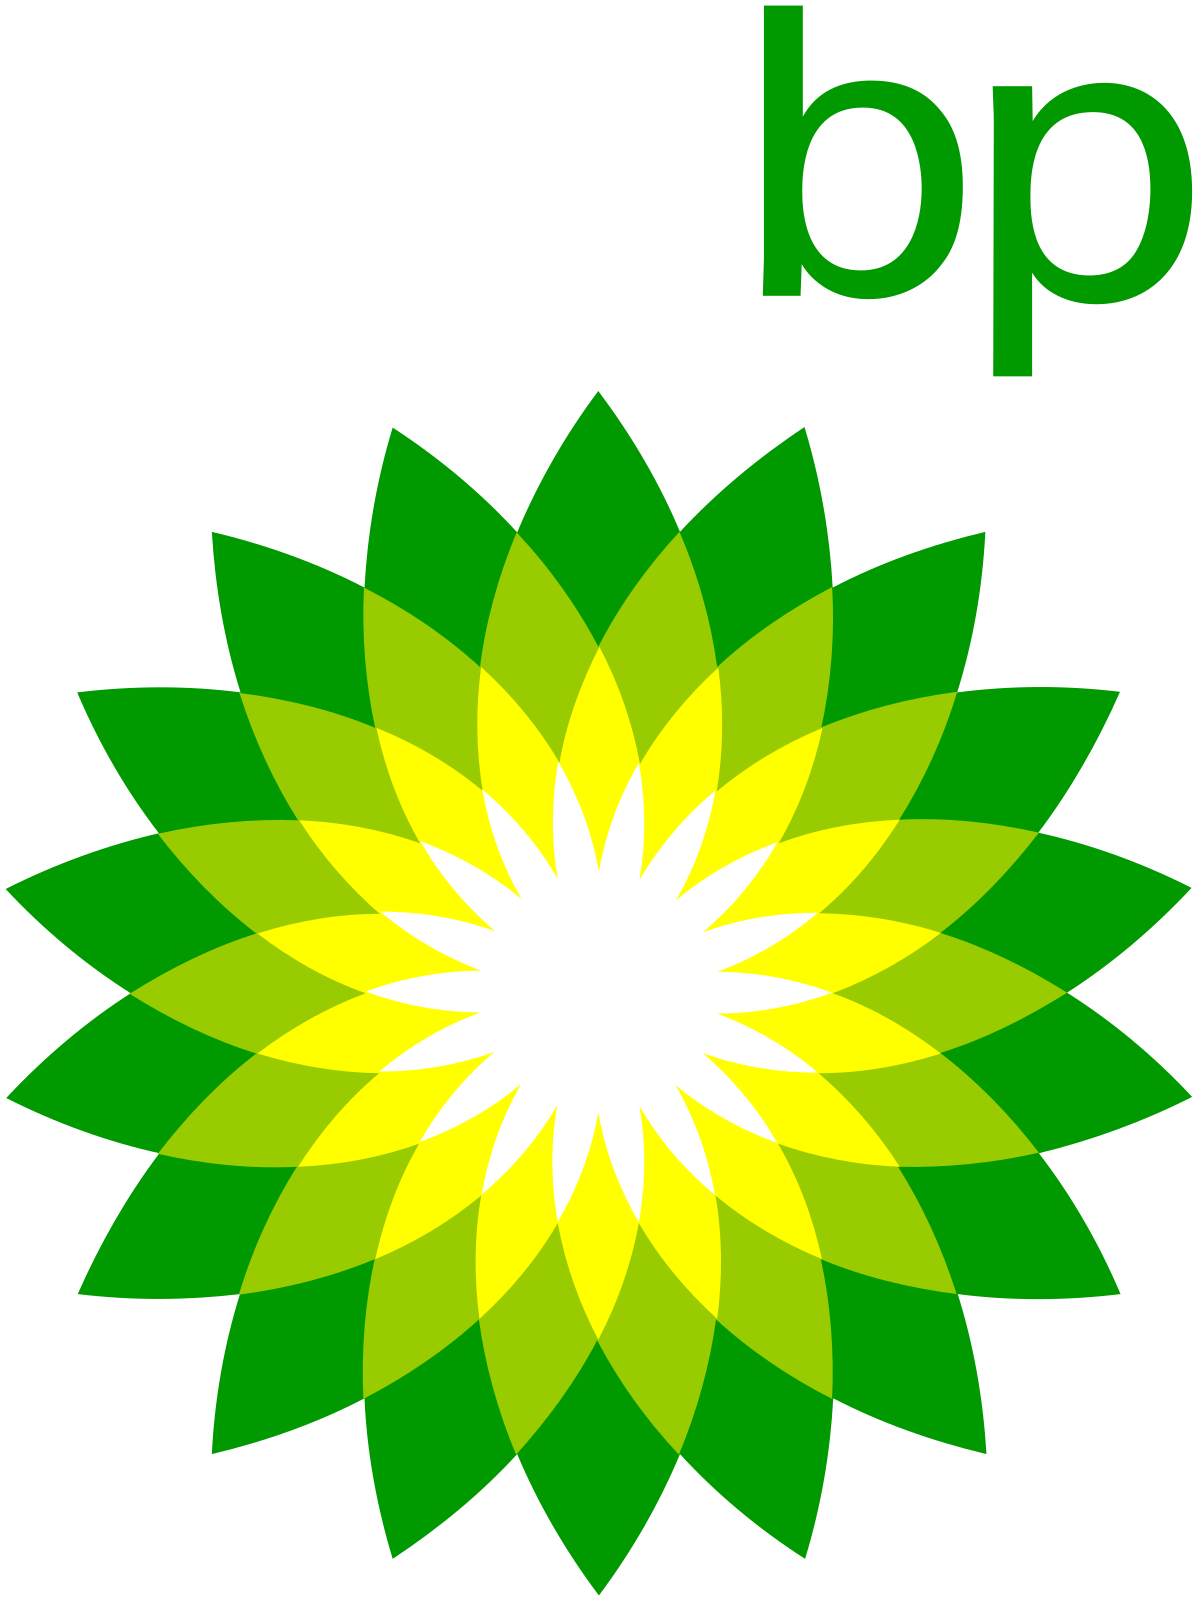 Oil Company Logo - BP